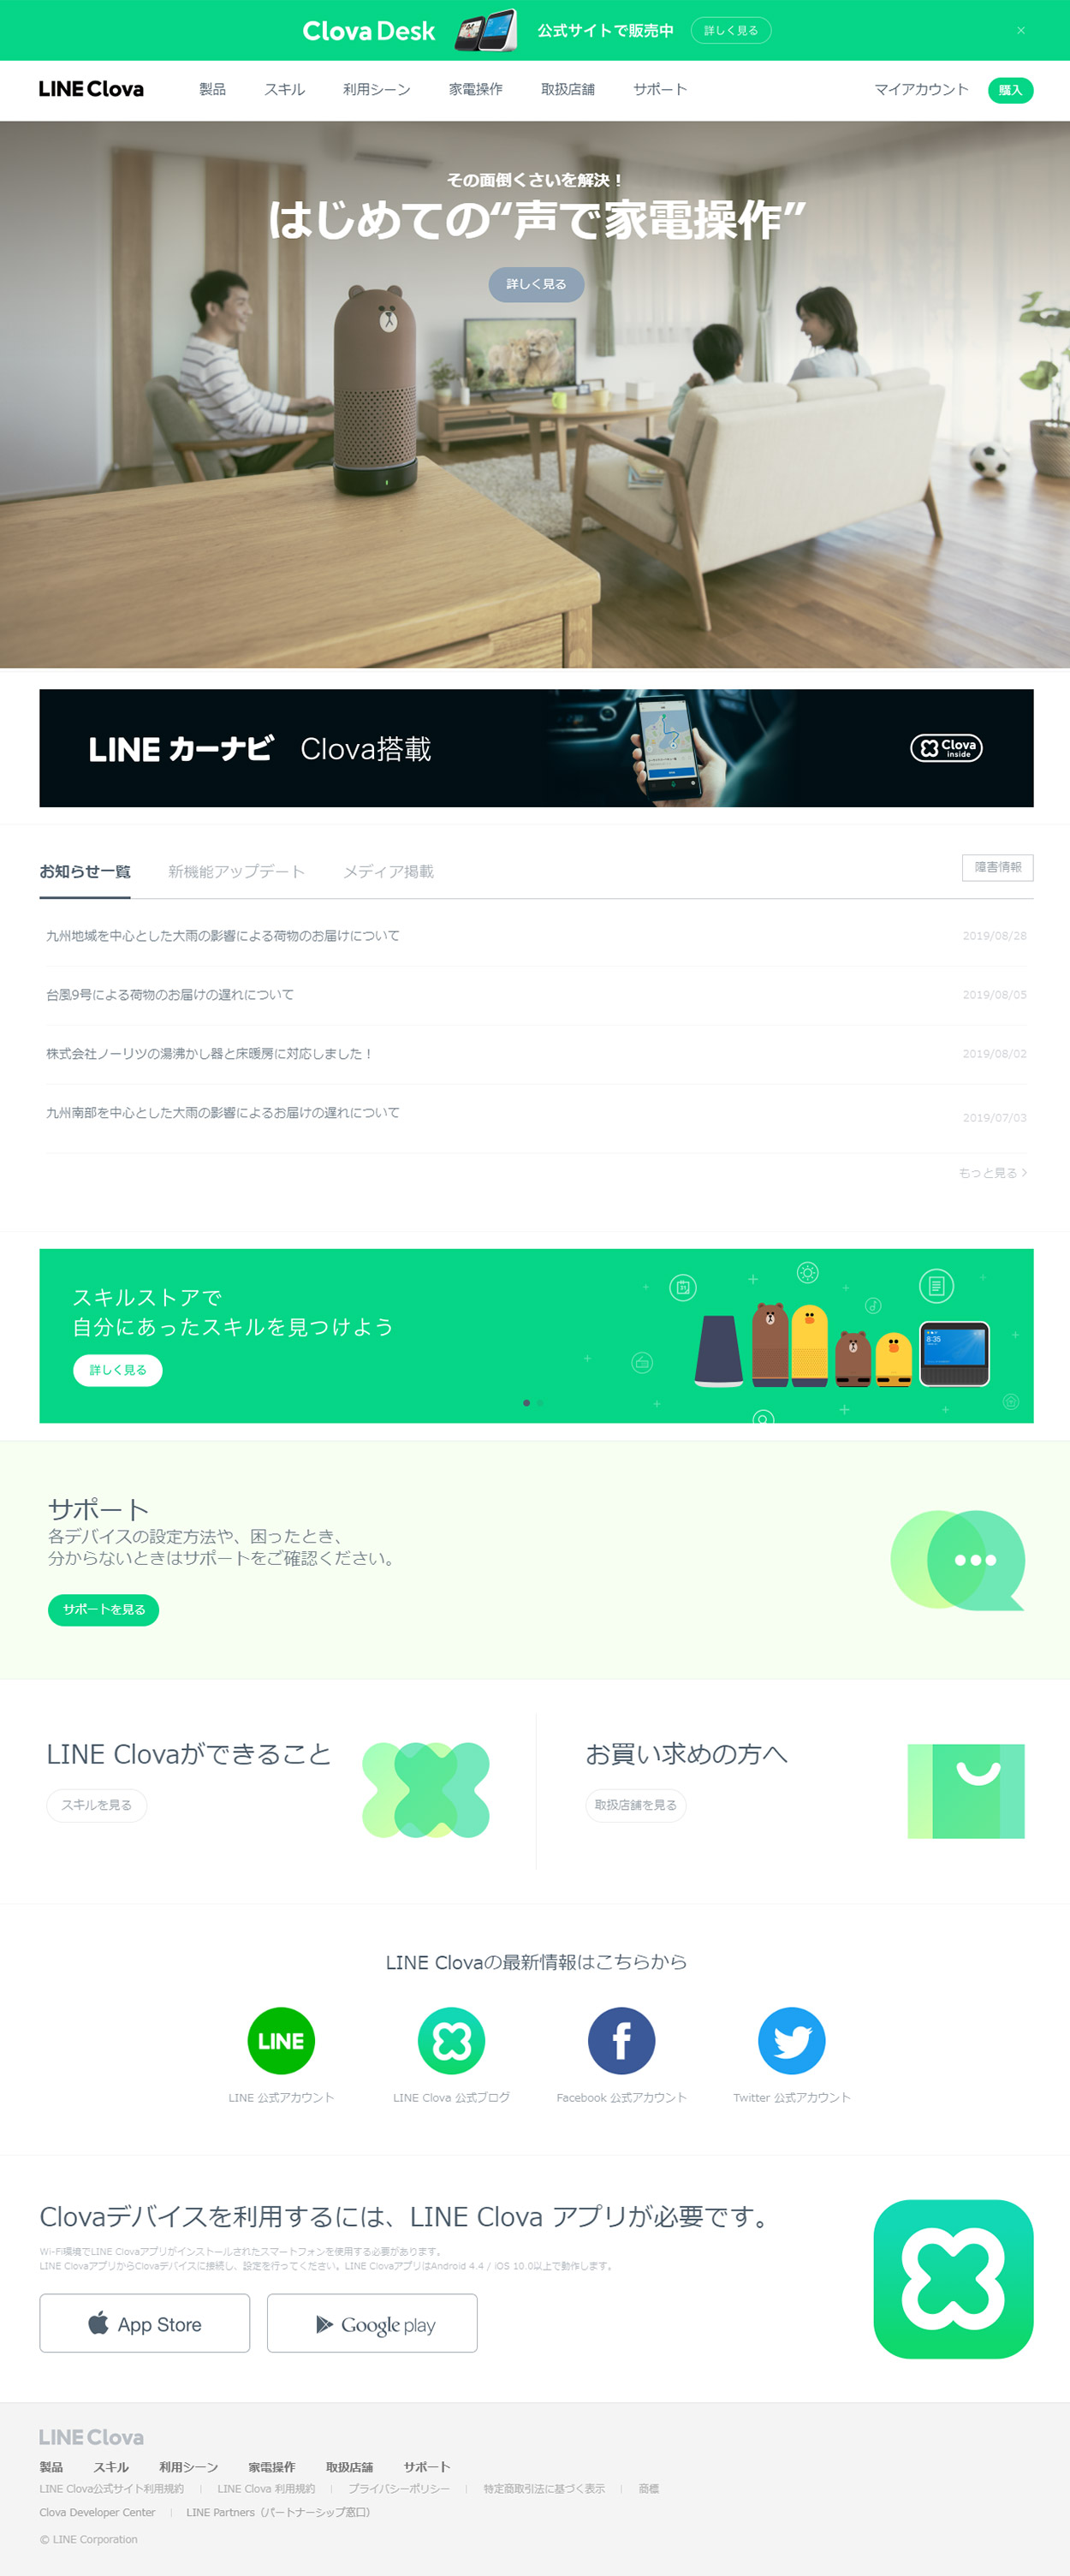 Line Clova公式サイト Sankou Webデザインギャラリー 参考サイト集